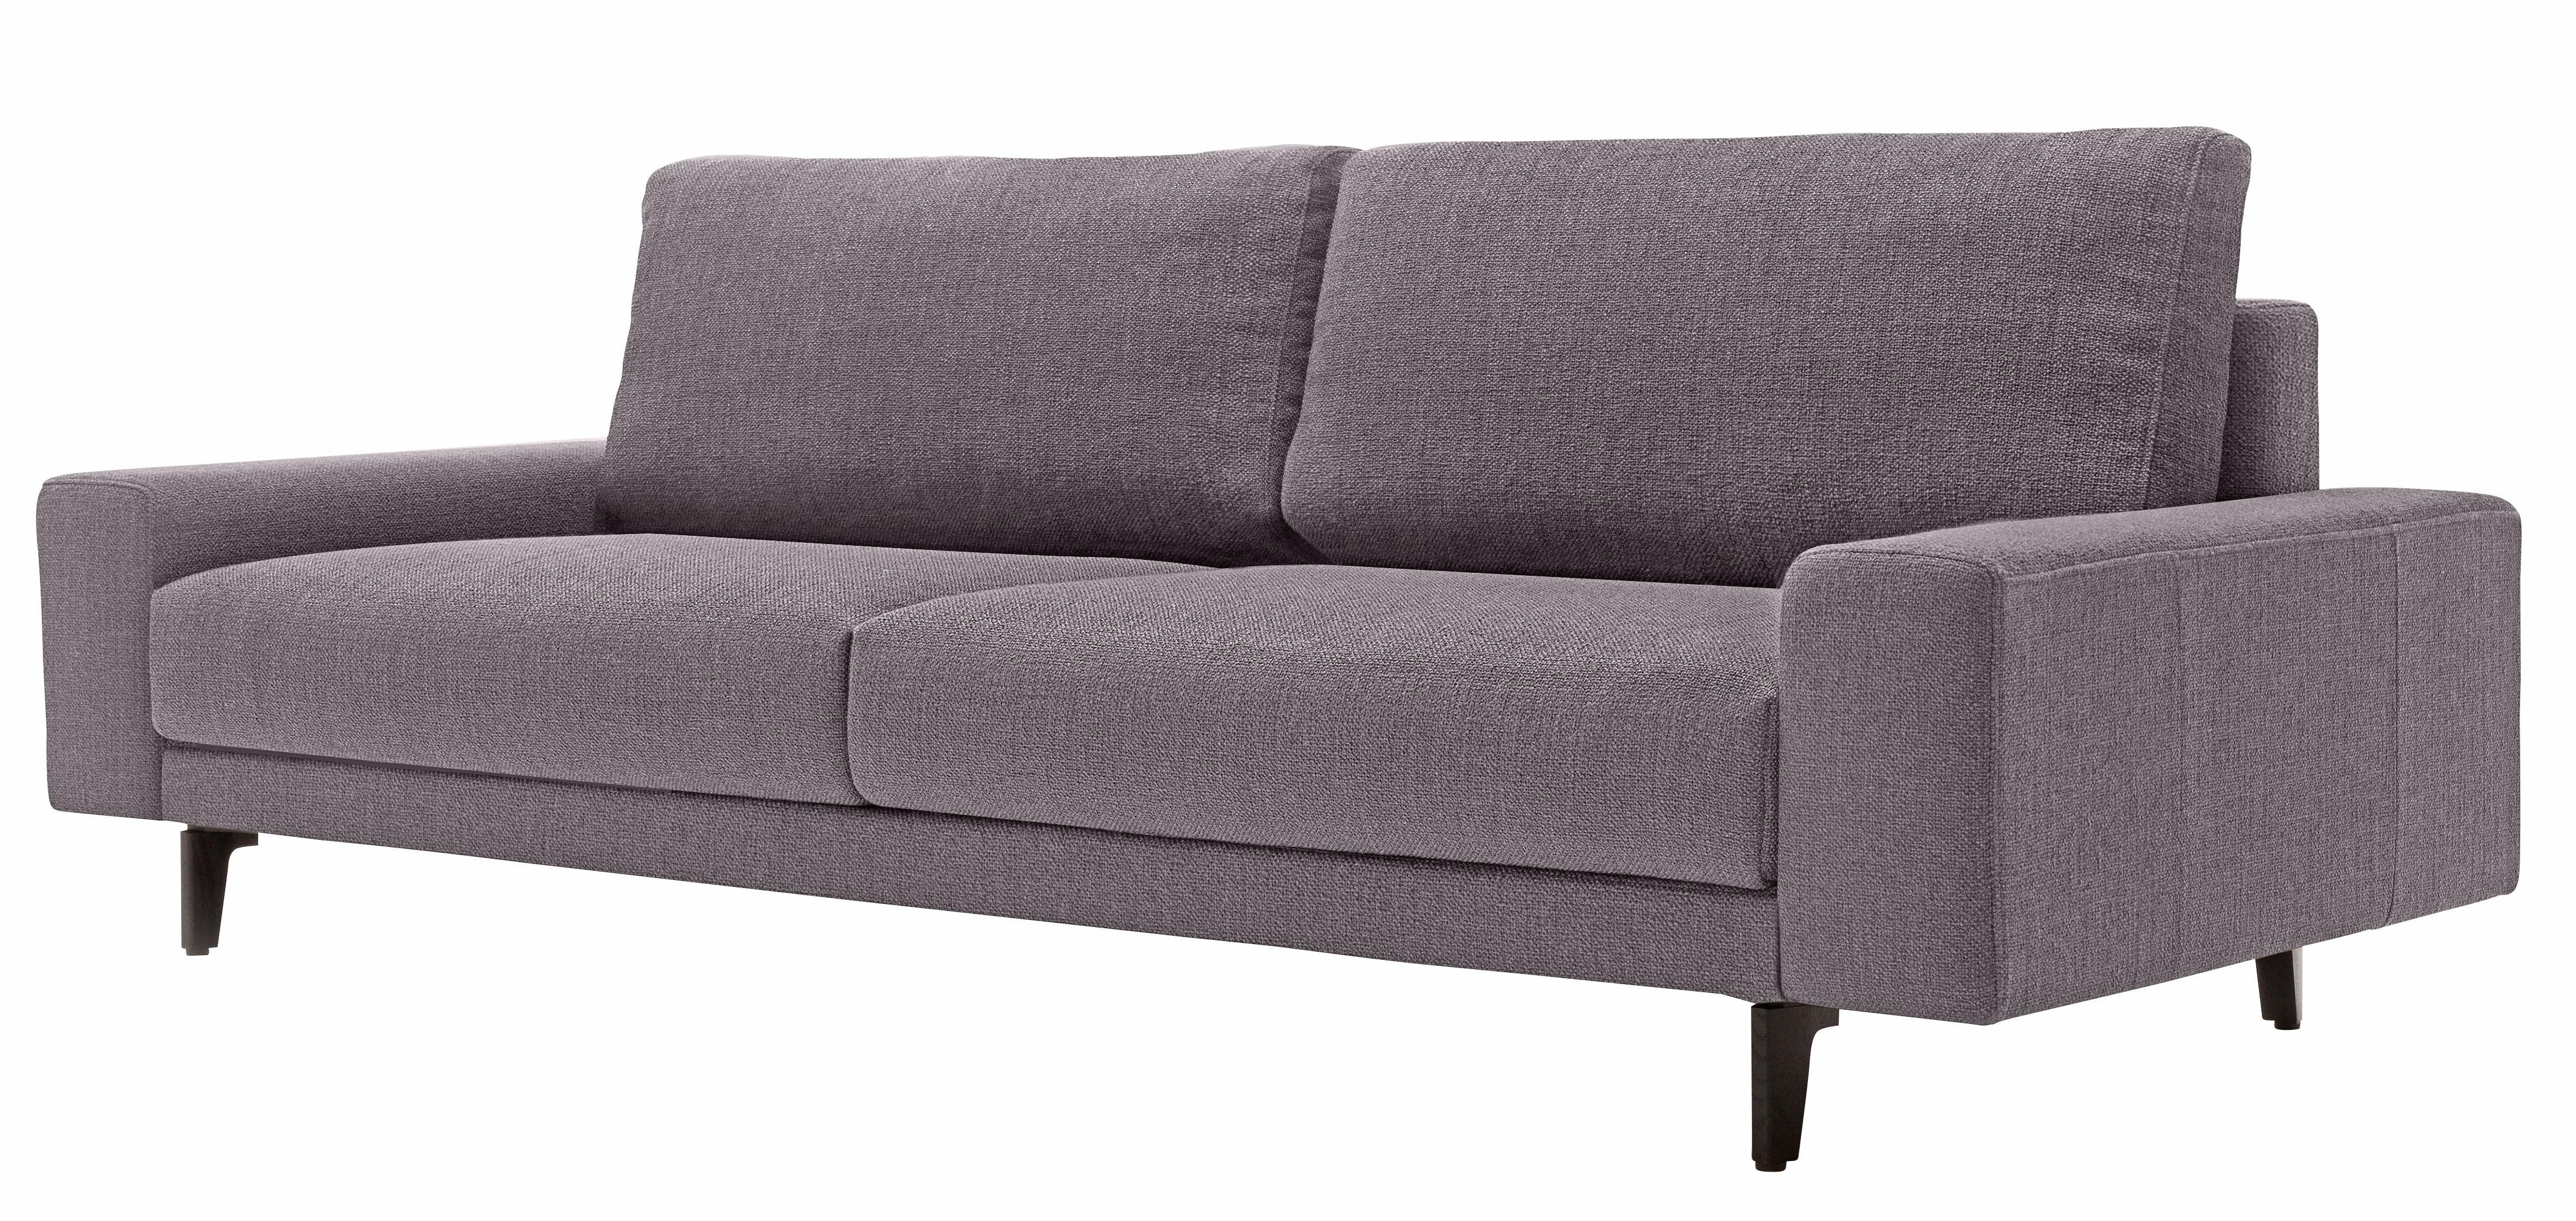 Armlehne niedrig, hülsta 220 cm 3-Sitzer hs.450, sofa Alugussfüße in breit umbragrau, Breite